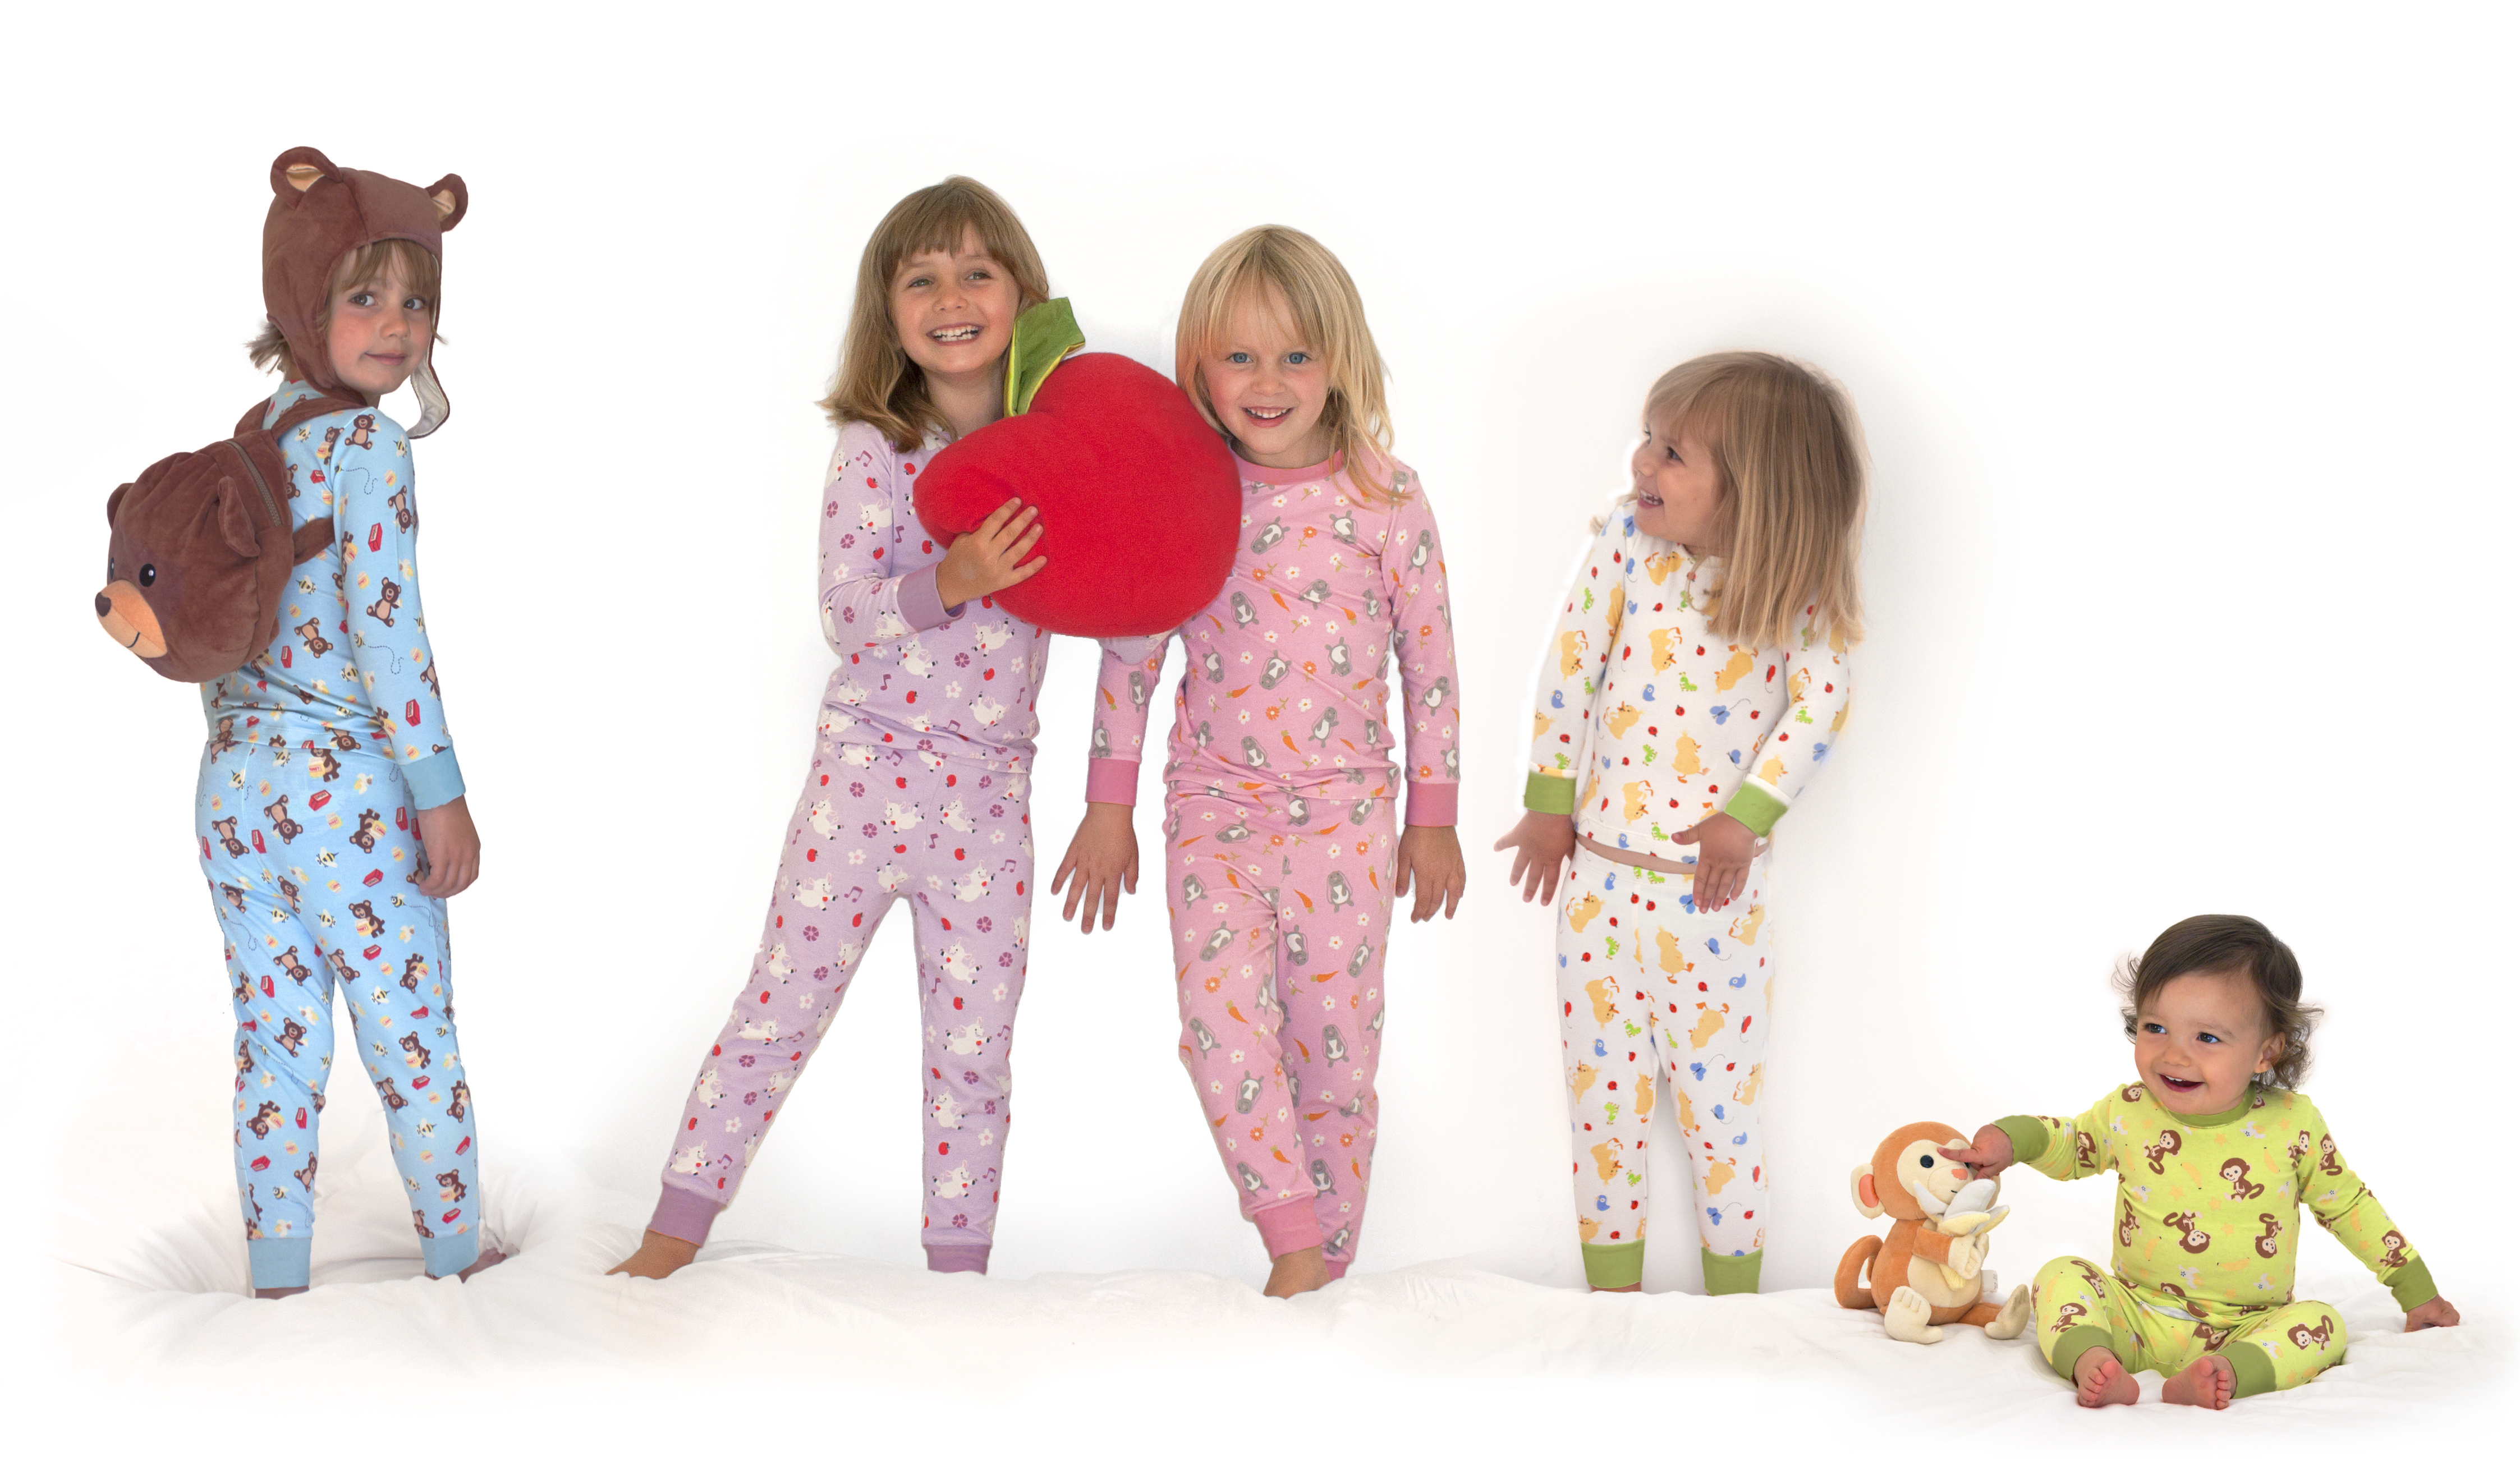 Pyjama party kids